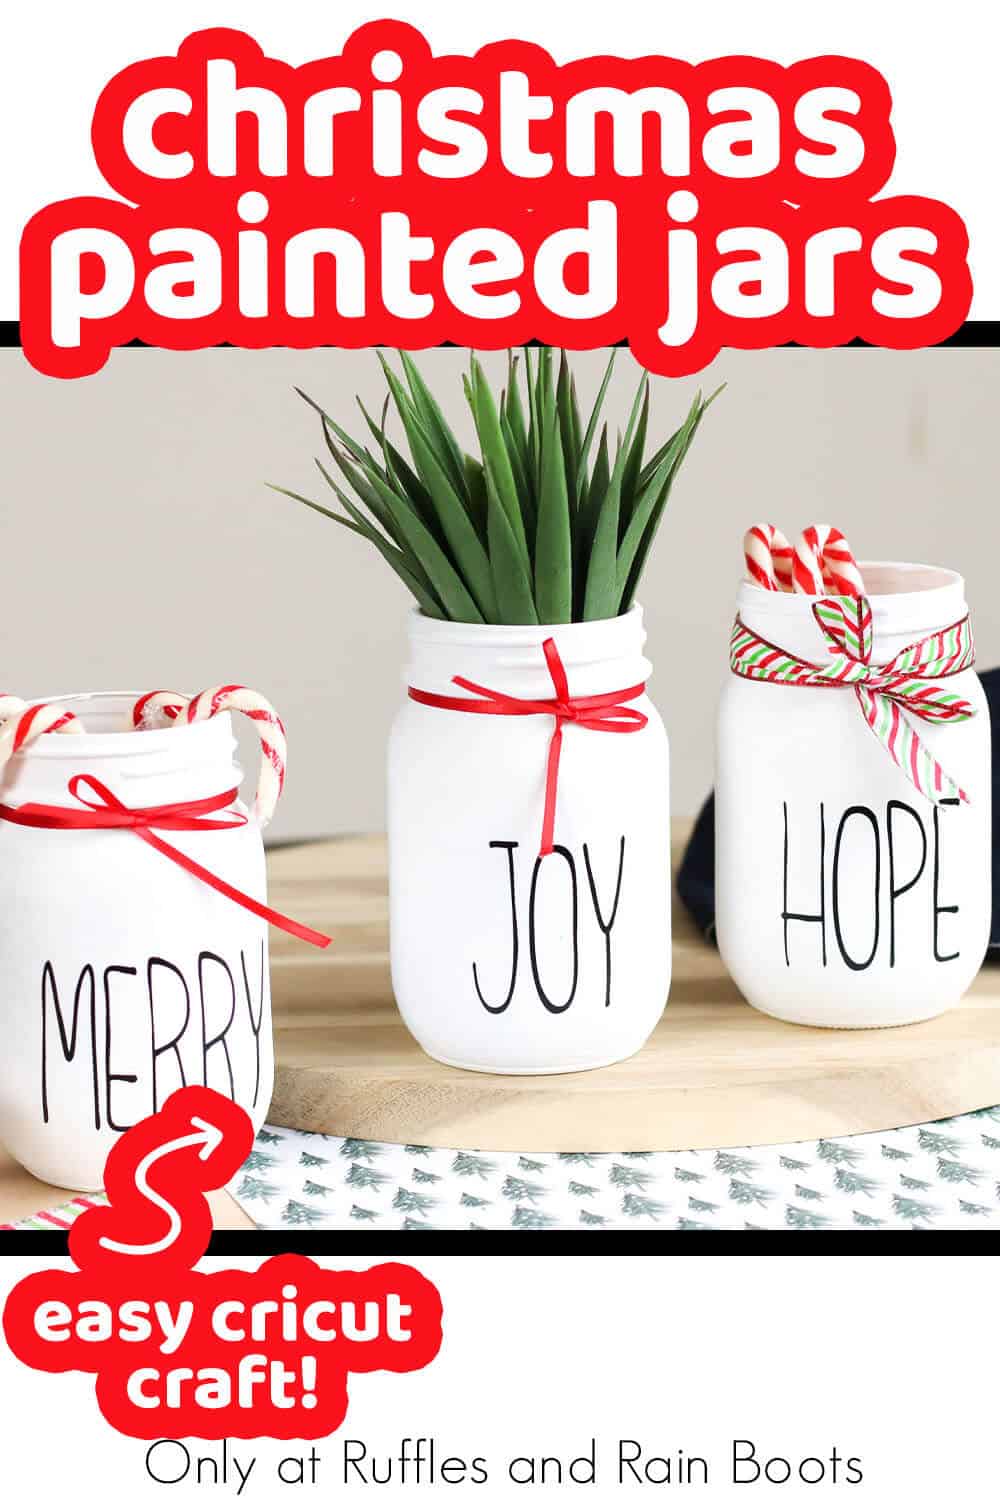 White painted jars for Christmas farmhouse decor with text which reads christmas painted jars easy Cricut craft.